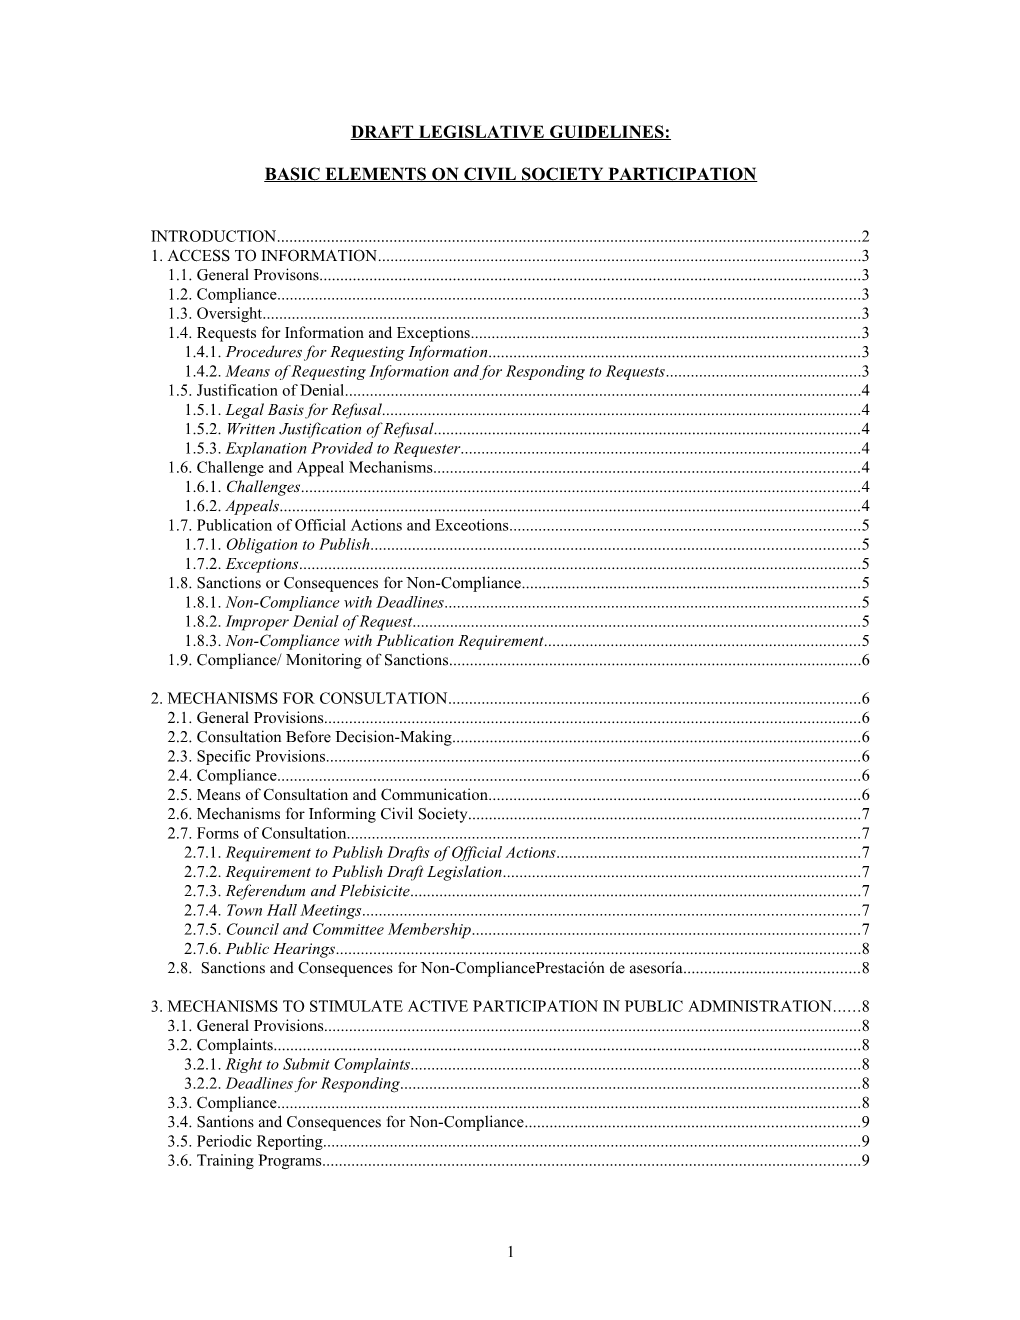 Proposed Basic Elements for Legislative Guideline On